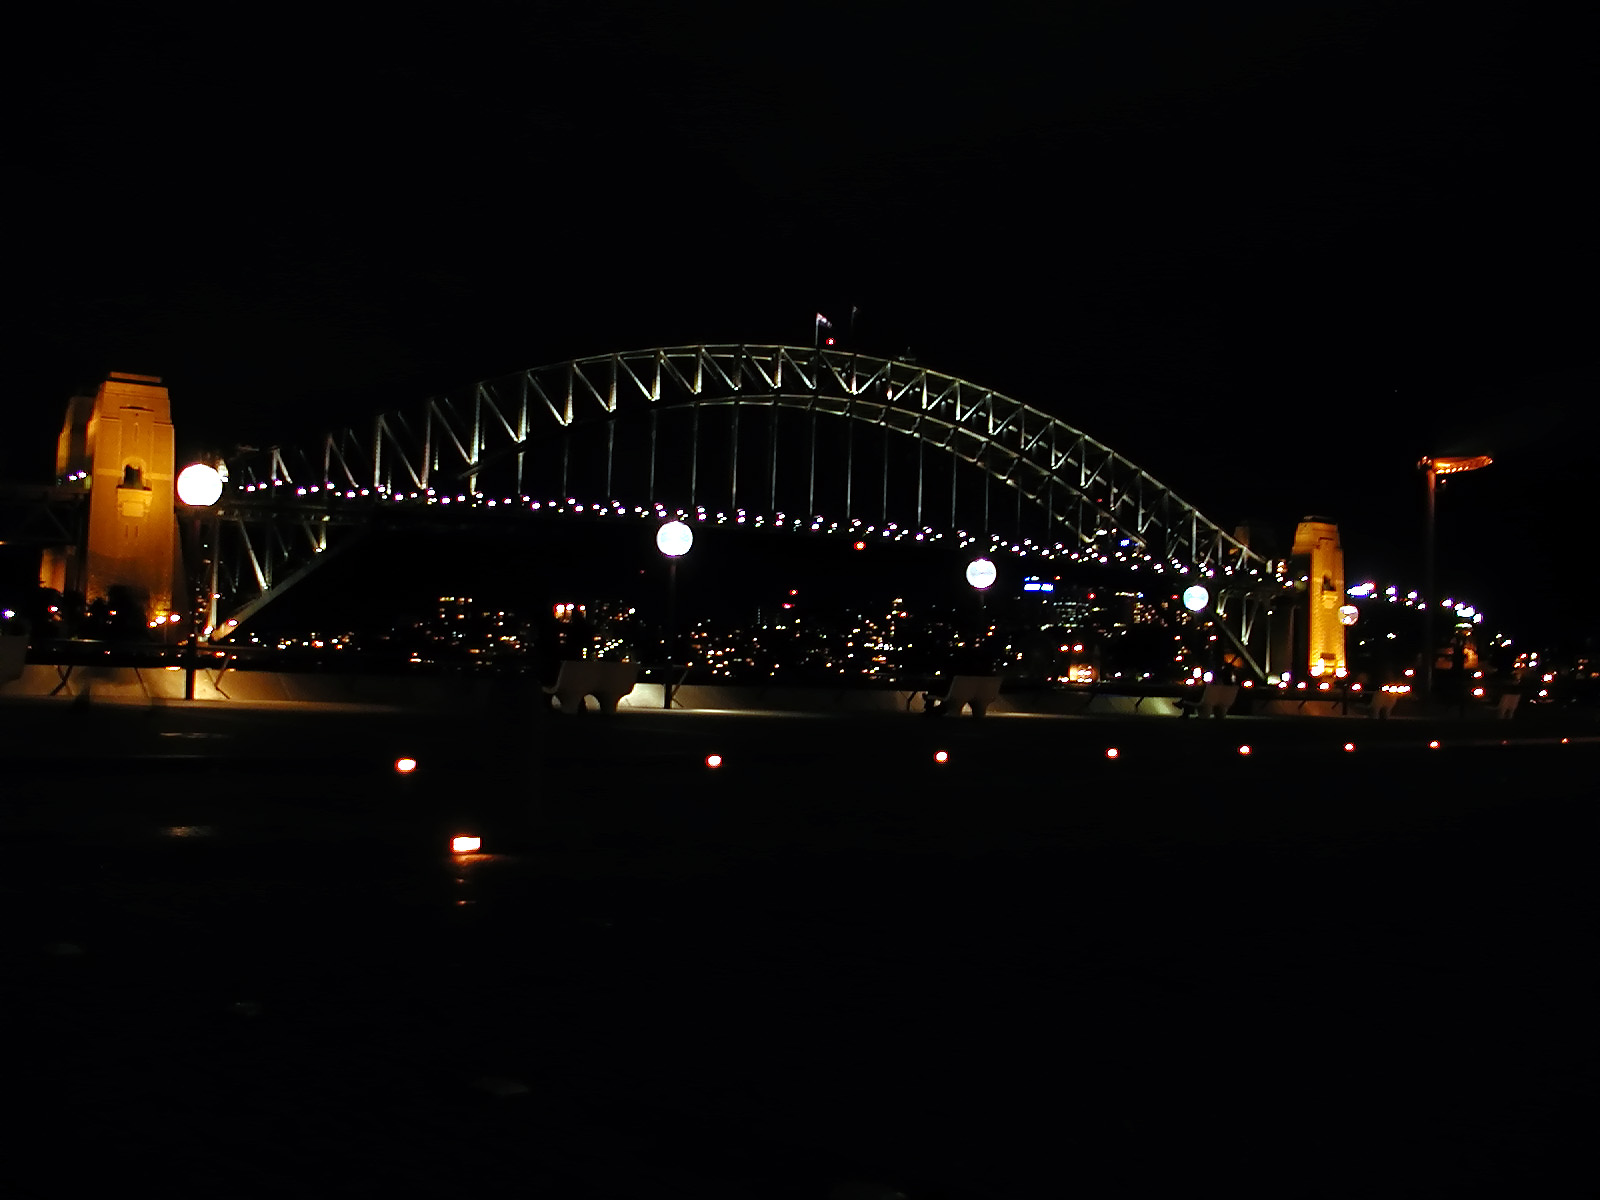 16-Jun-2001 21:11 - Sydney - Sydney Harbour Bridge